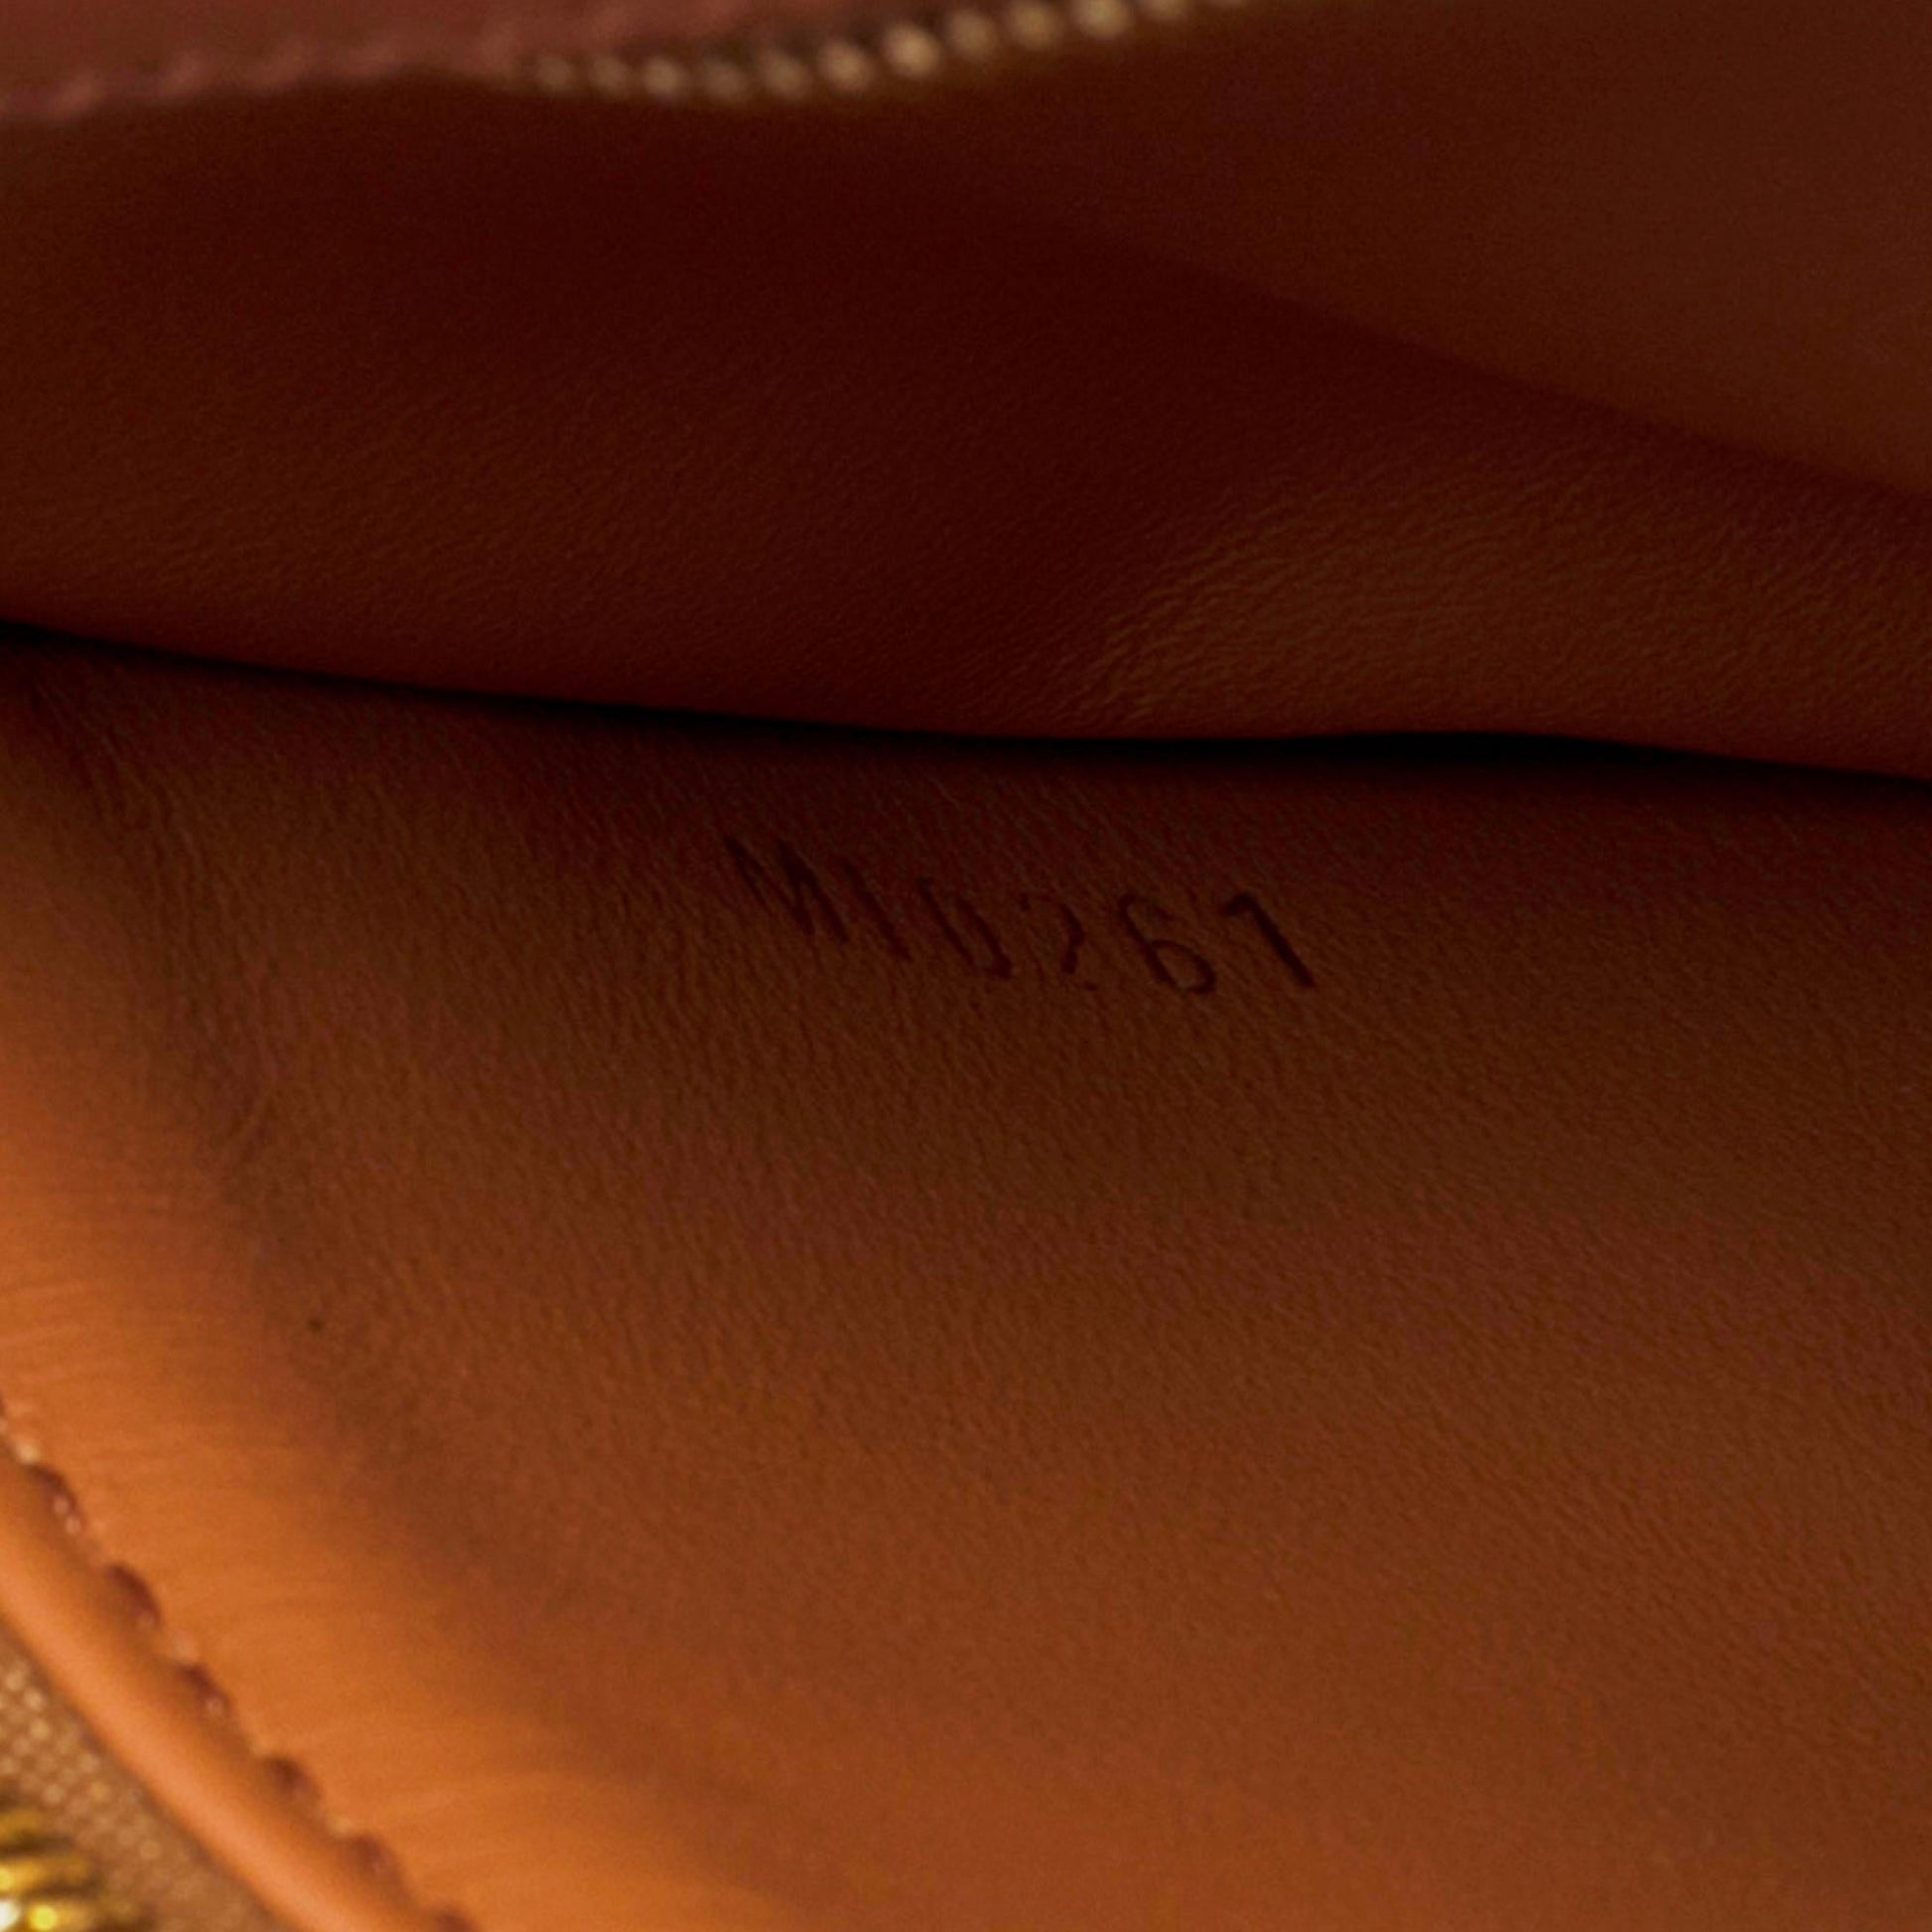 Louis Vuitton Limited Edition Capucines mm Handbag Strap in Braided Raffia, GHW